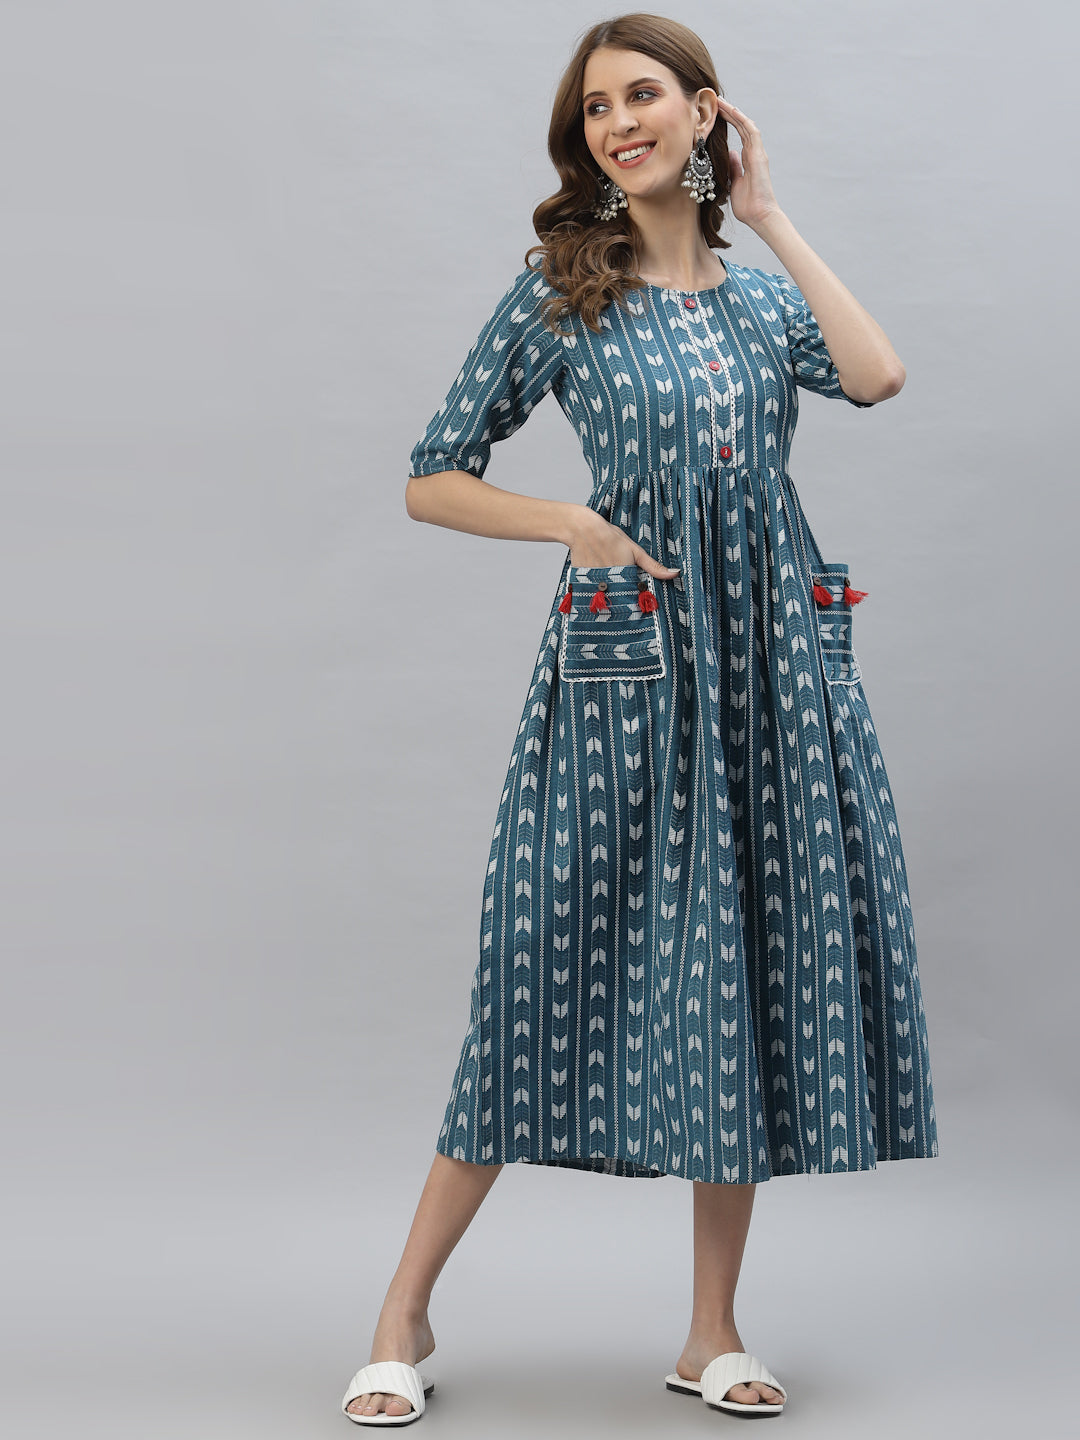 Casual Lawn Cotton Dress Designing Ideas for Ladies | Pakistani dresses  casual, Simple dresses, Fashion design dress